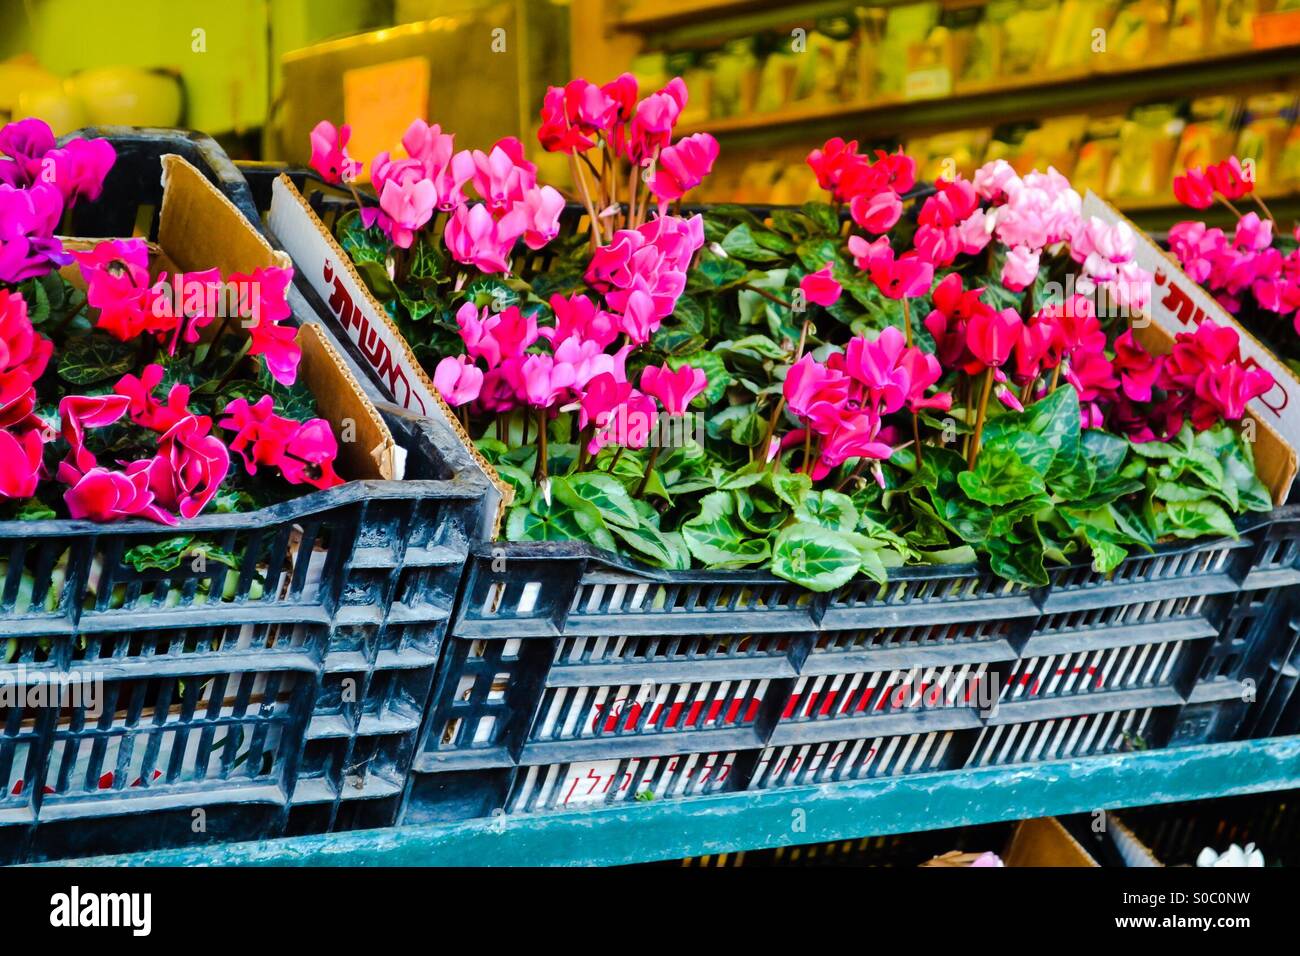 Market flowers Stock Photo